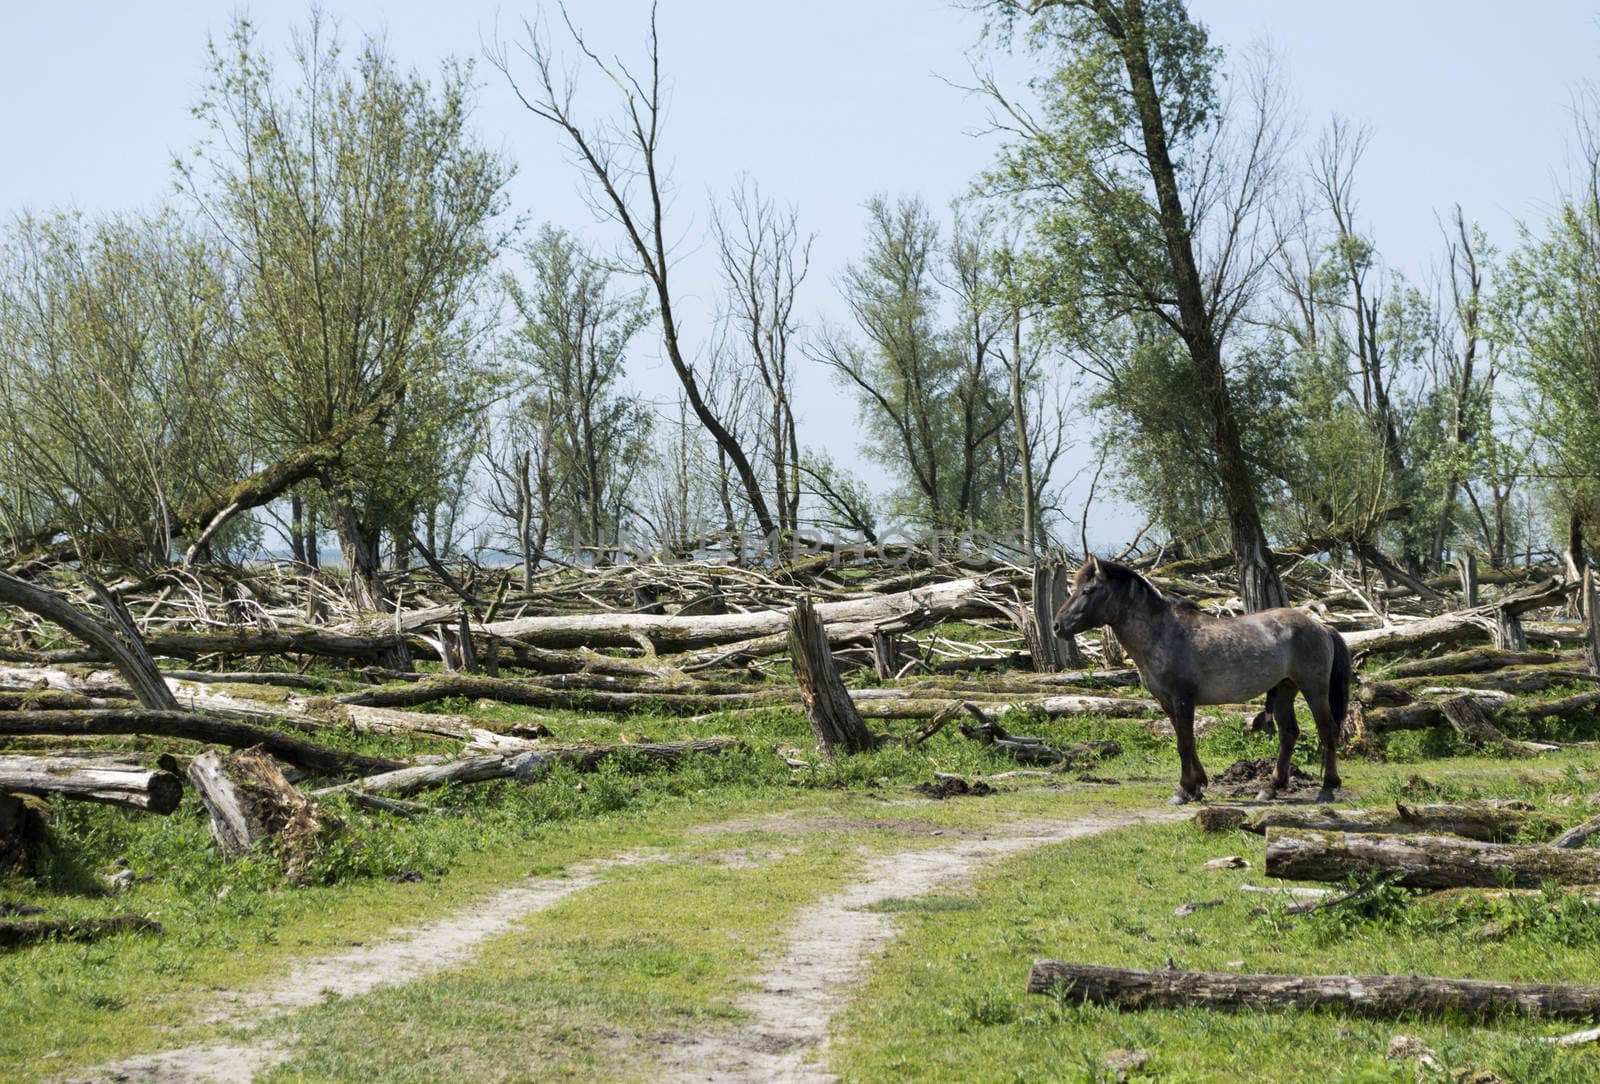 wild konink horses in dutch landscape by compuinfoto